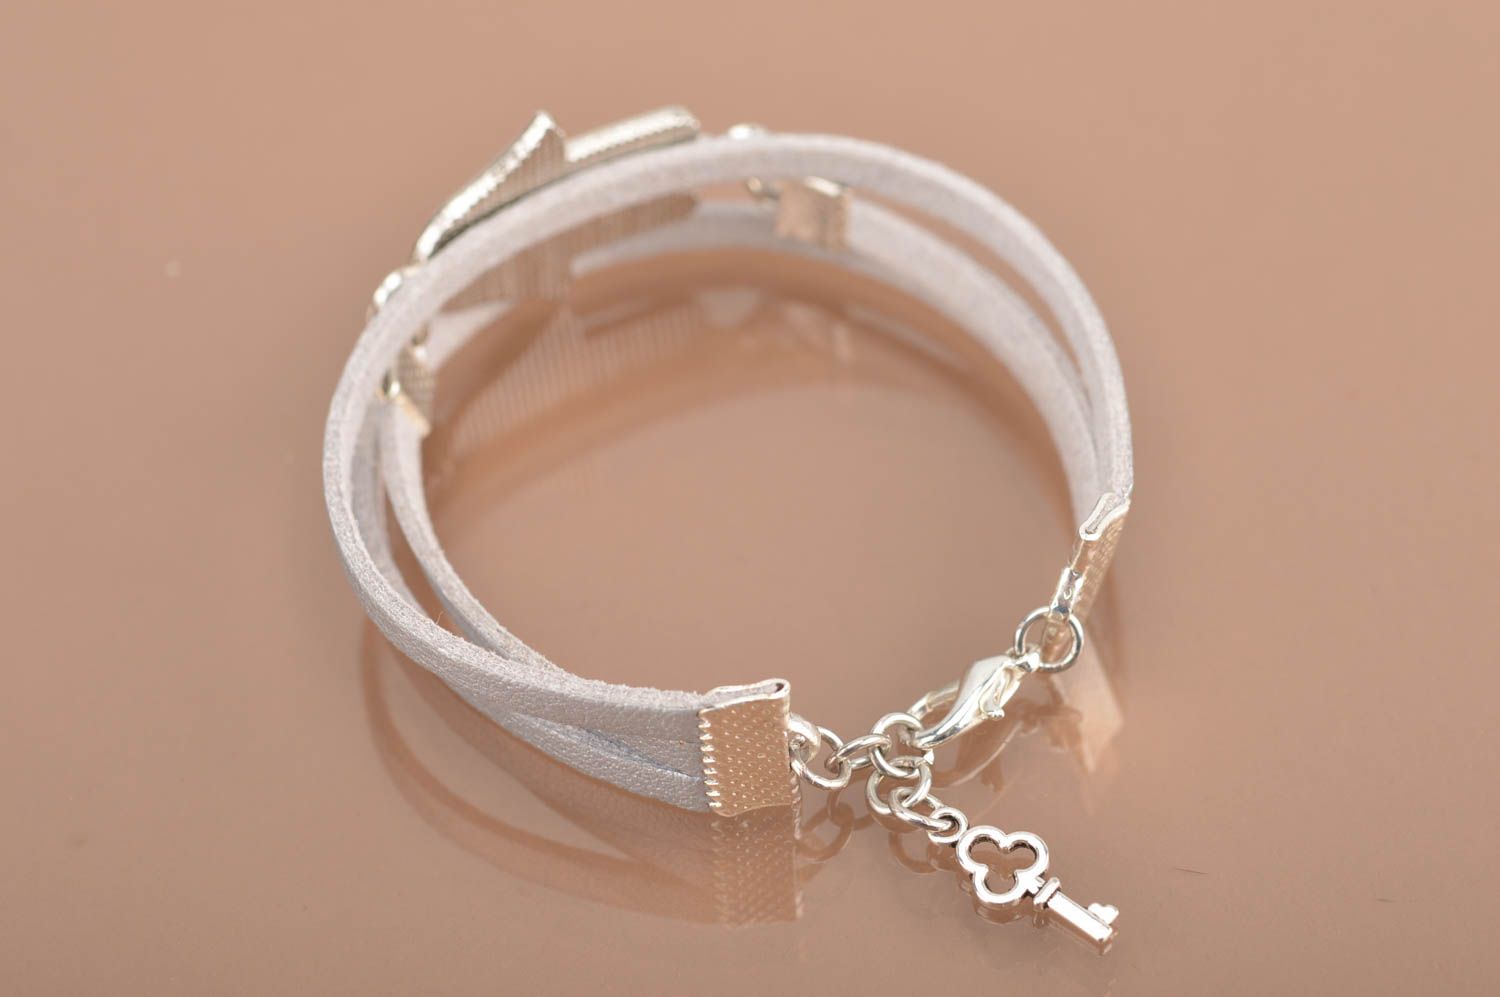 Unusual handmade suede cord bracelet unisex bracelet designs fashion trends photo 5